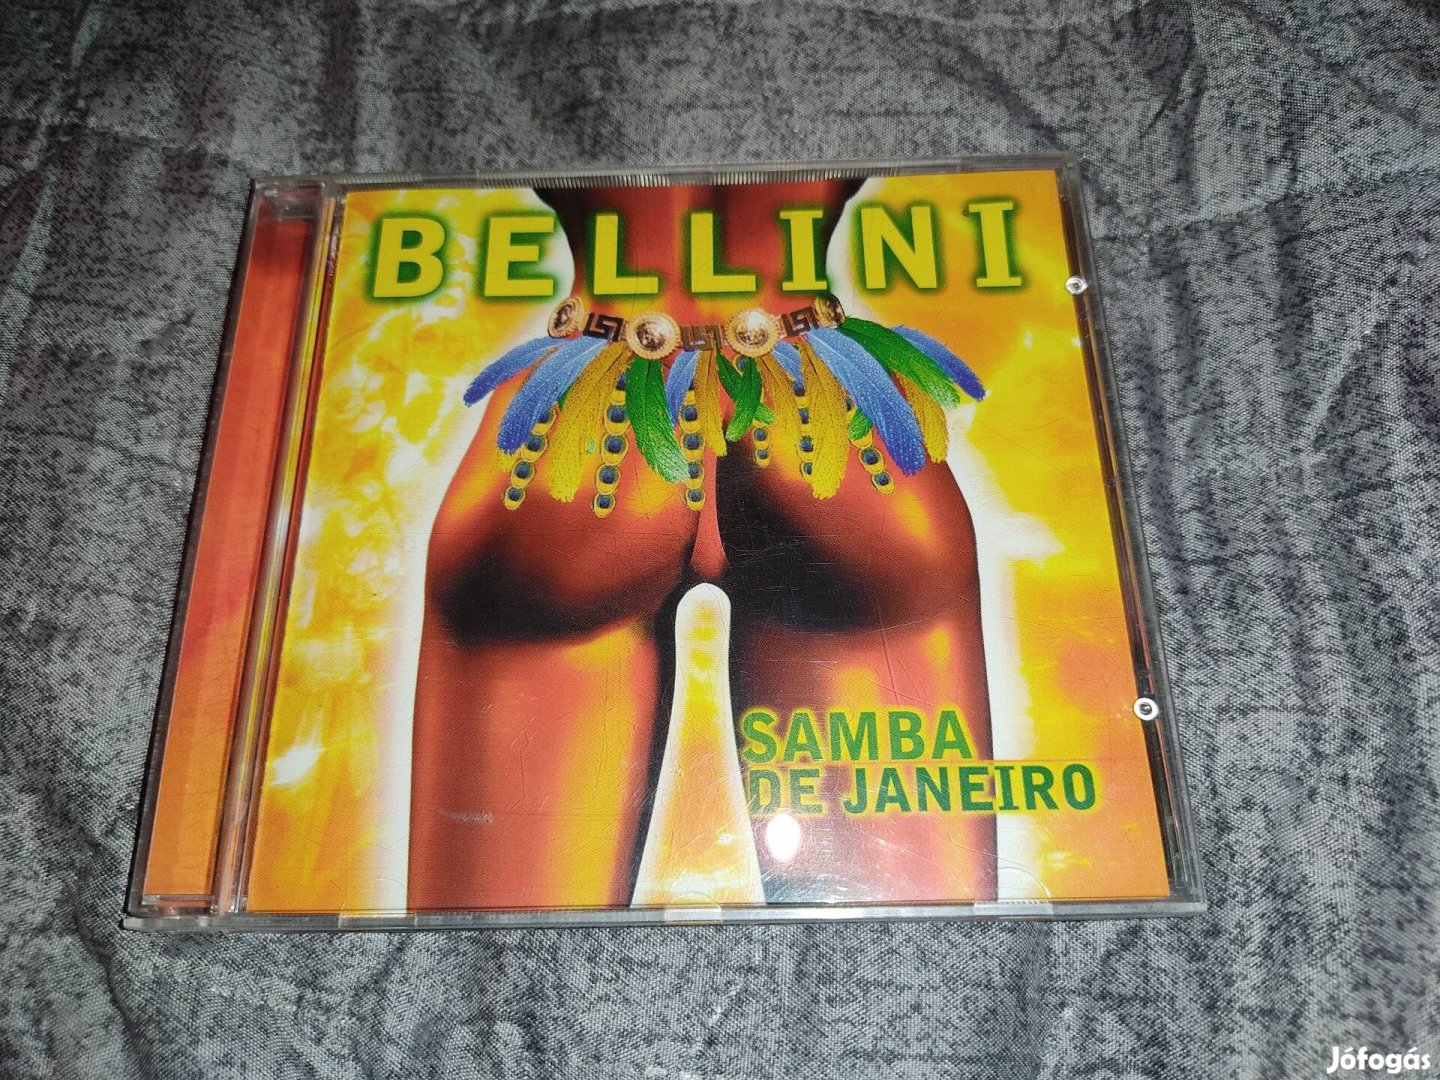 Bellini - Samba De Janeiro CD (1997)